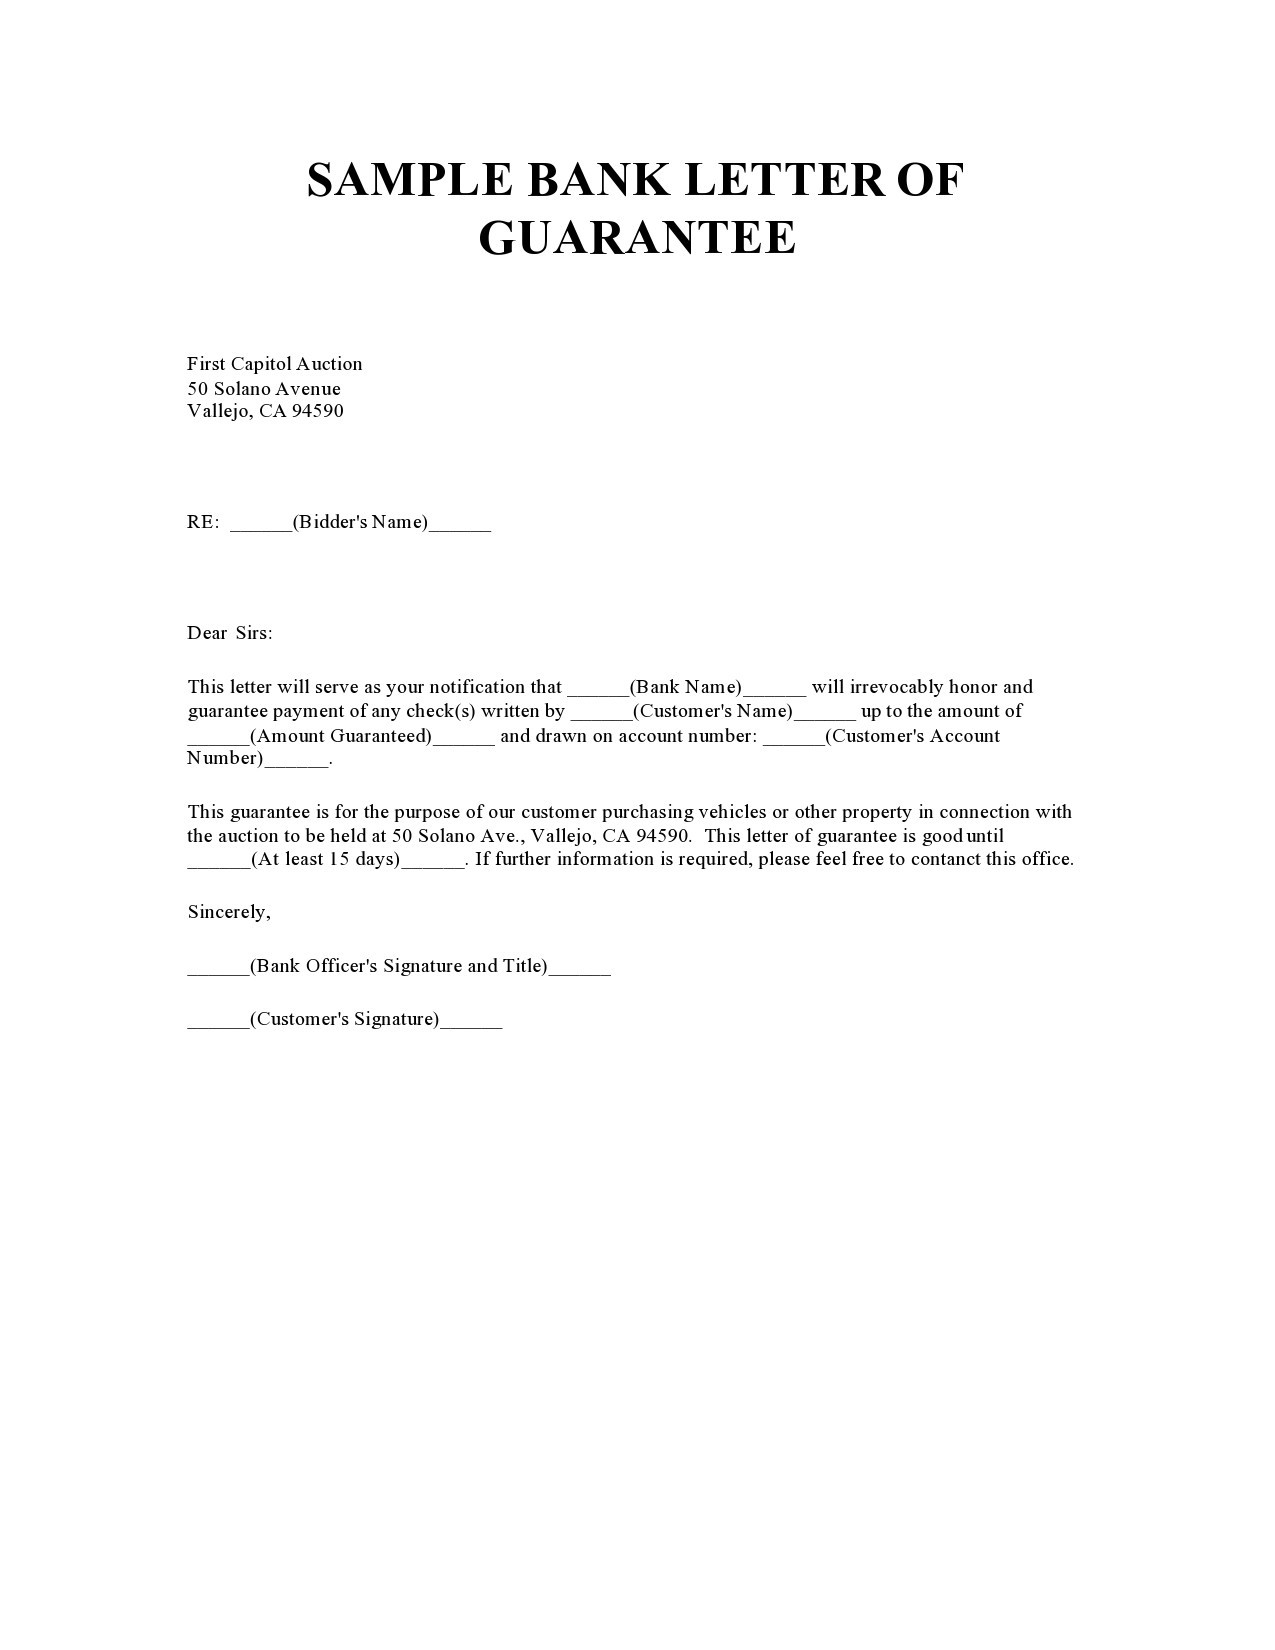 45 Professional Letter Of Guarantee Samples ᐅ TemplateLab